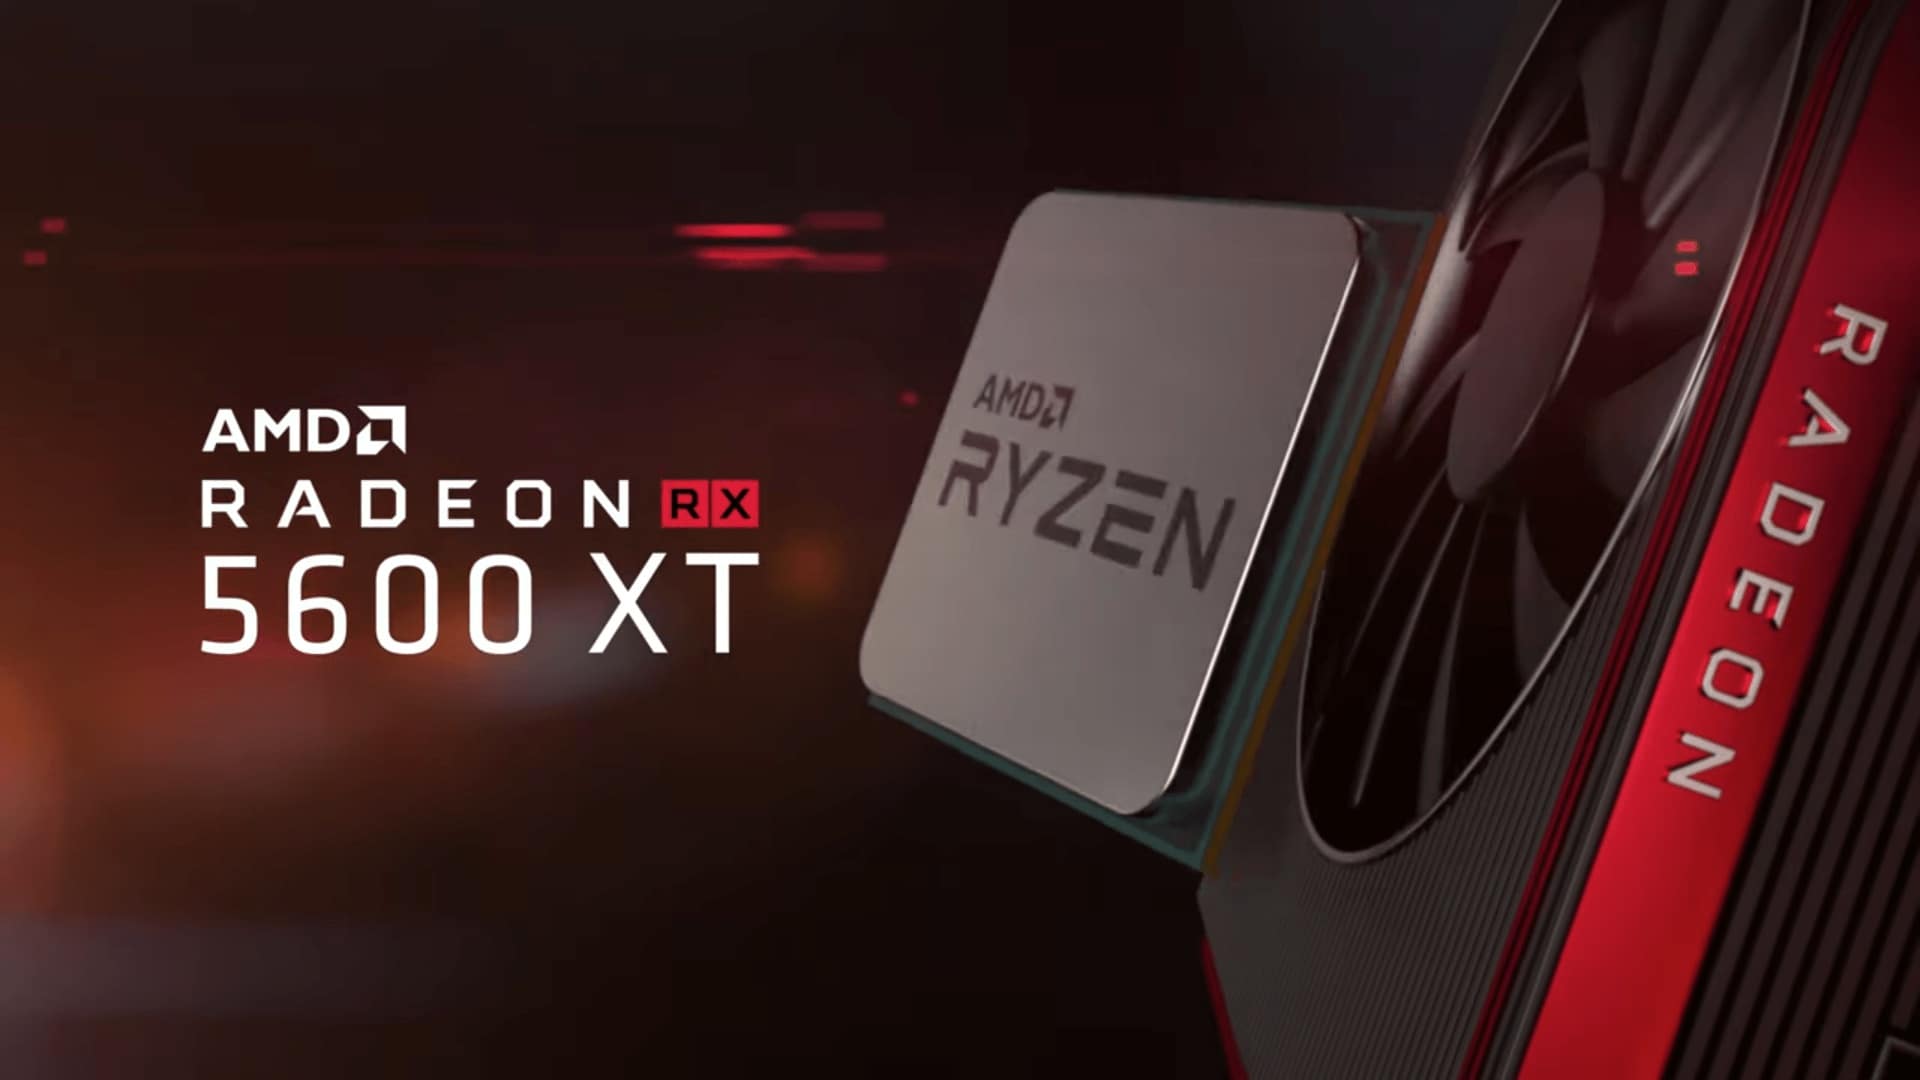 Radeon 5600 XT, Ryzen 4000 Mobile and Threadripper 3990X: the novelties of AMD